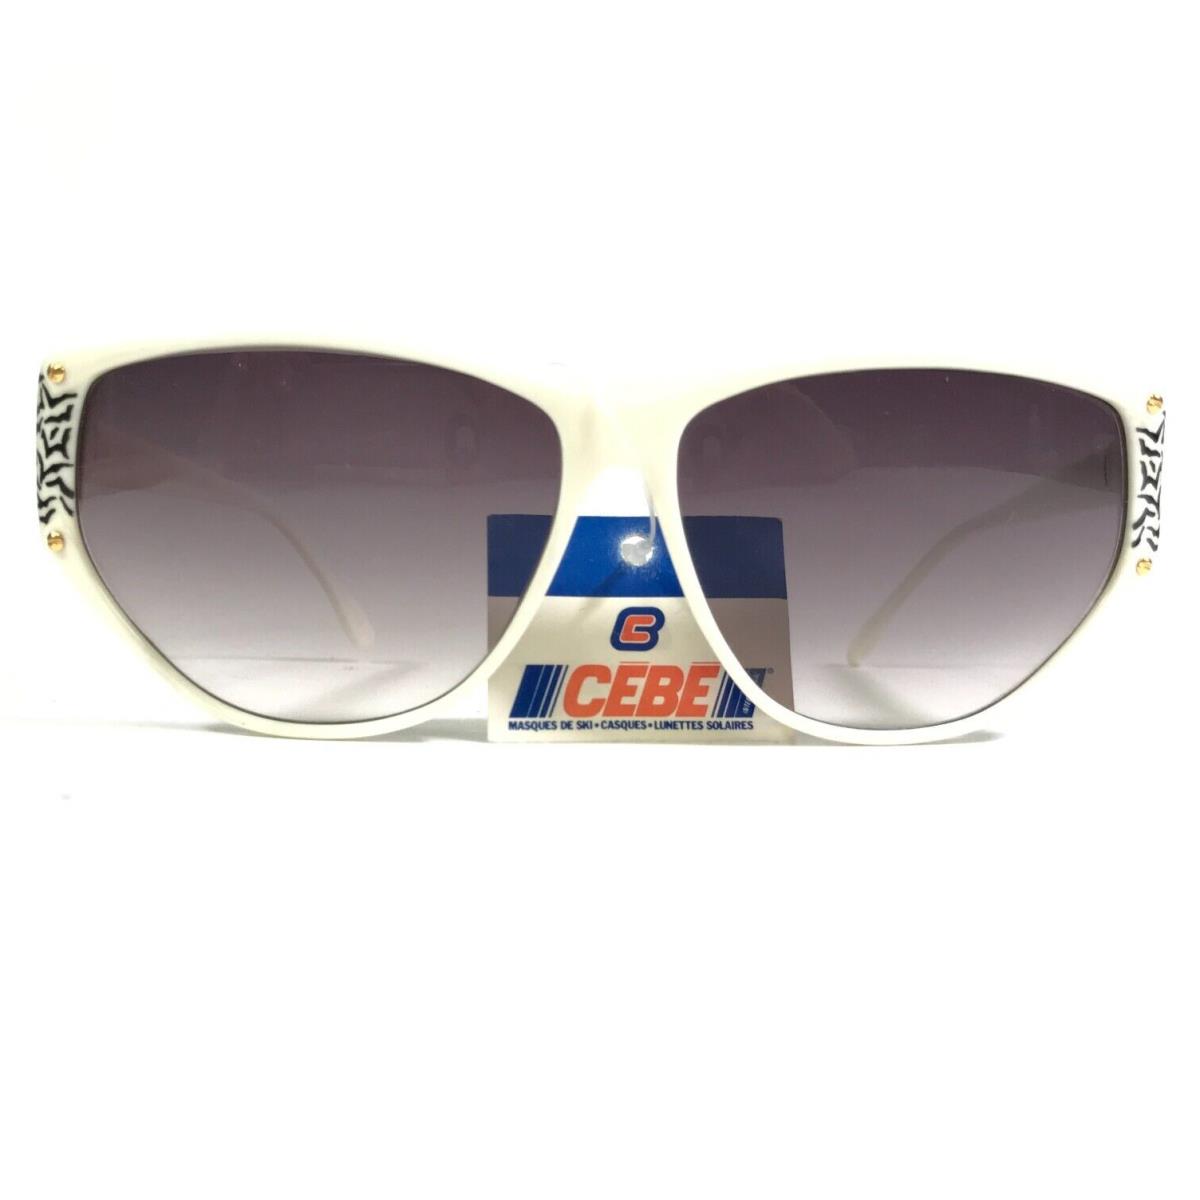 Vintage Cebe Sunglasses Black White Geometric Frames with Purple Gradient Lenses